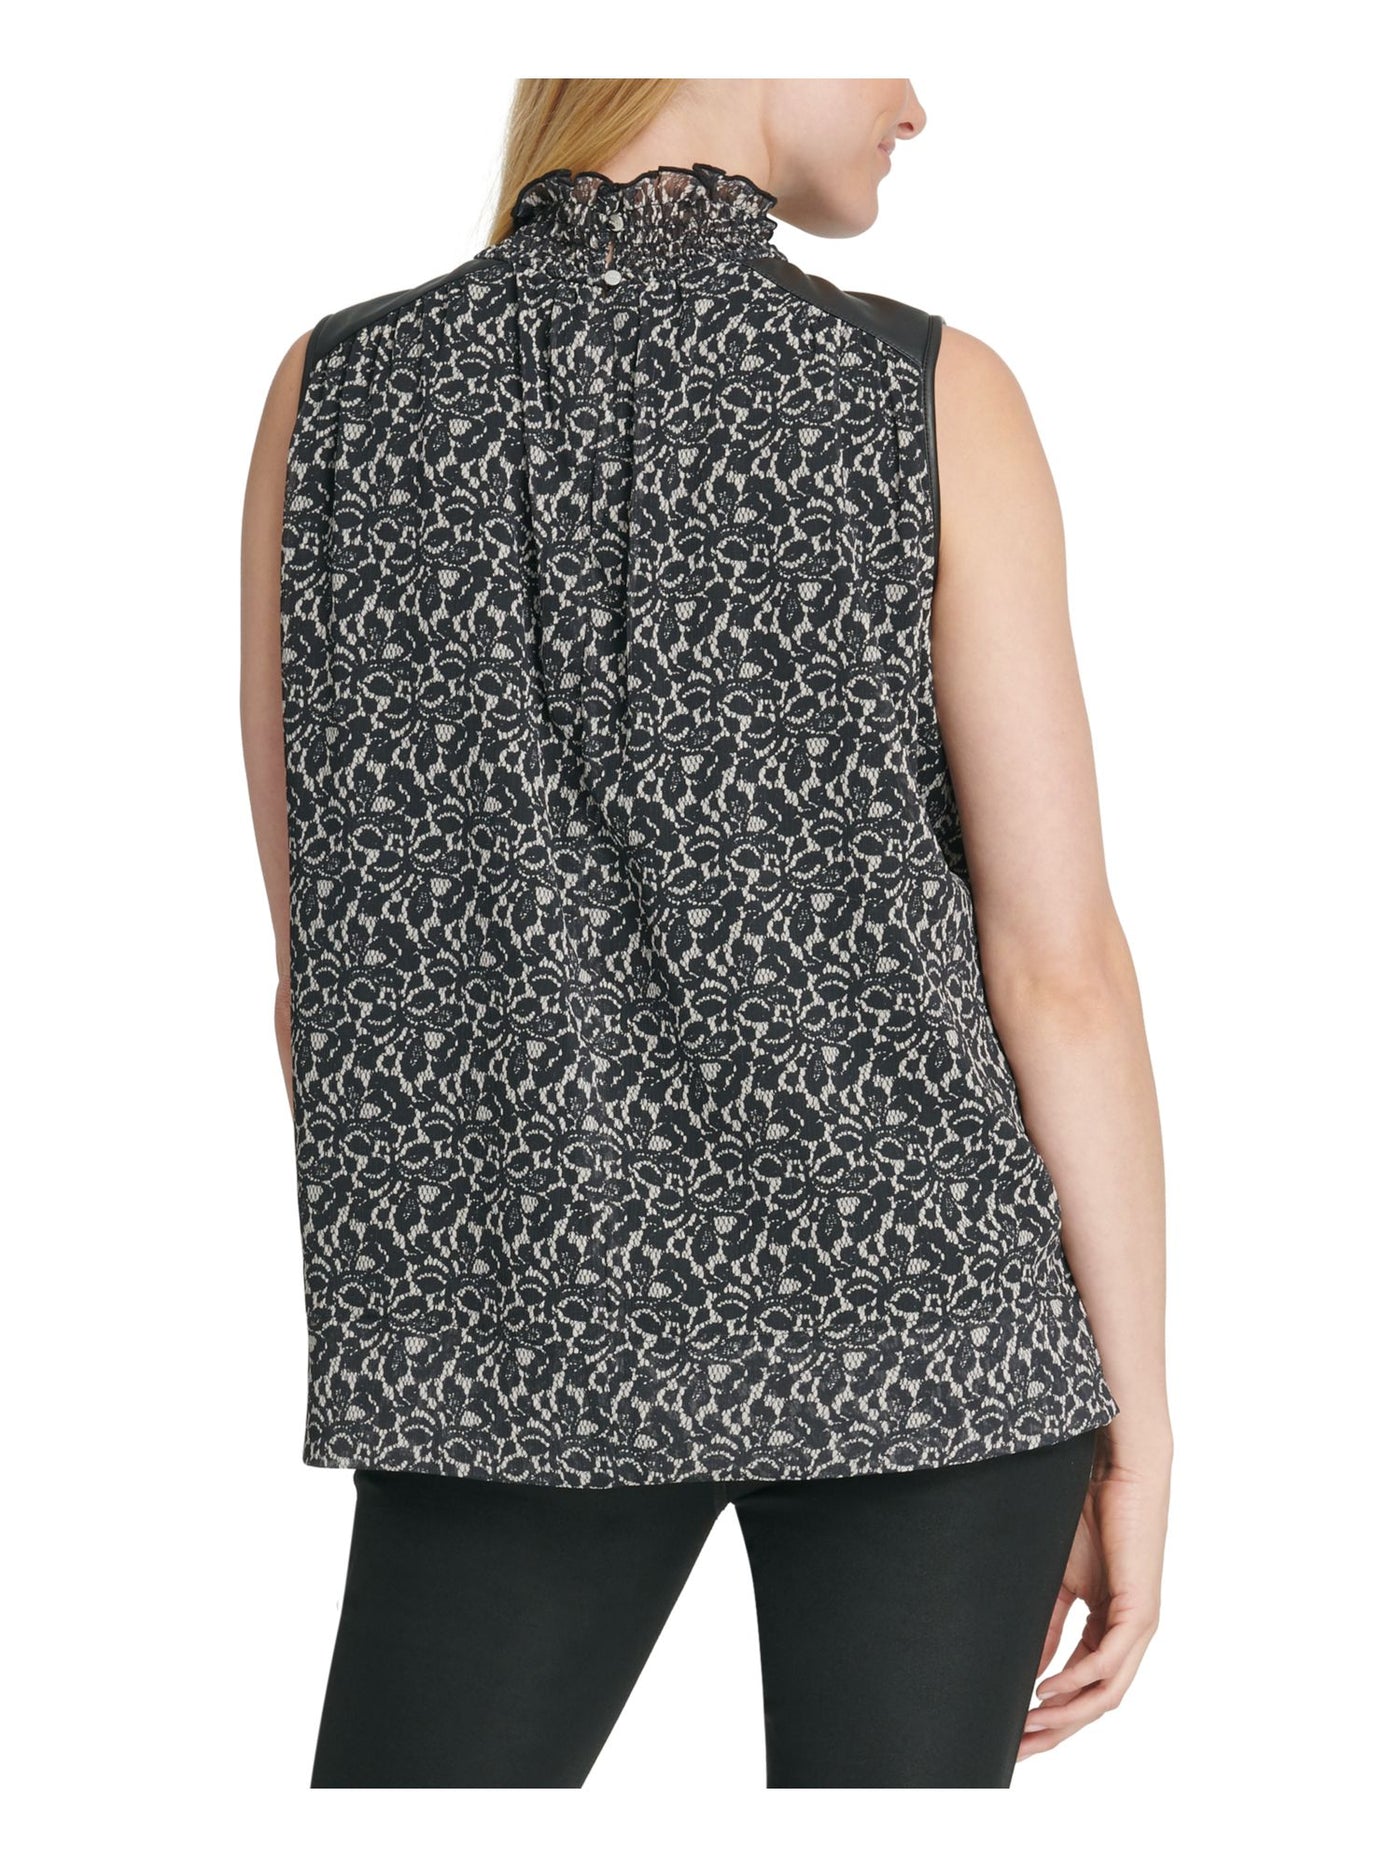 DKNY Womens Black Printed Sleeveless Mandarin Collar Top XS